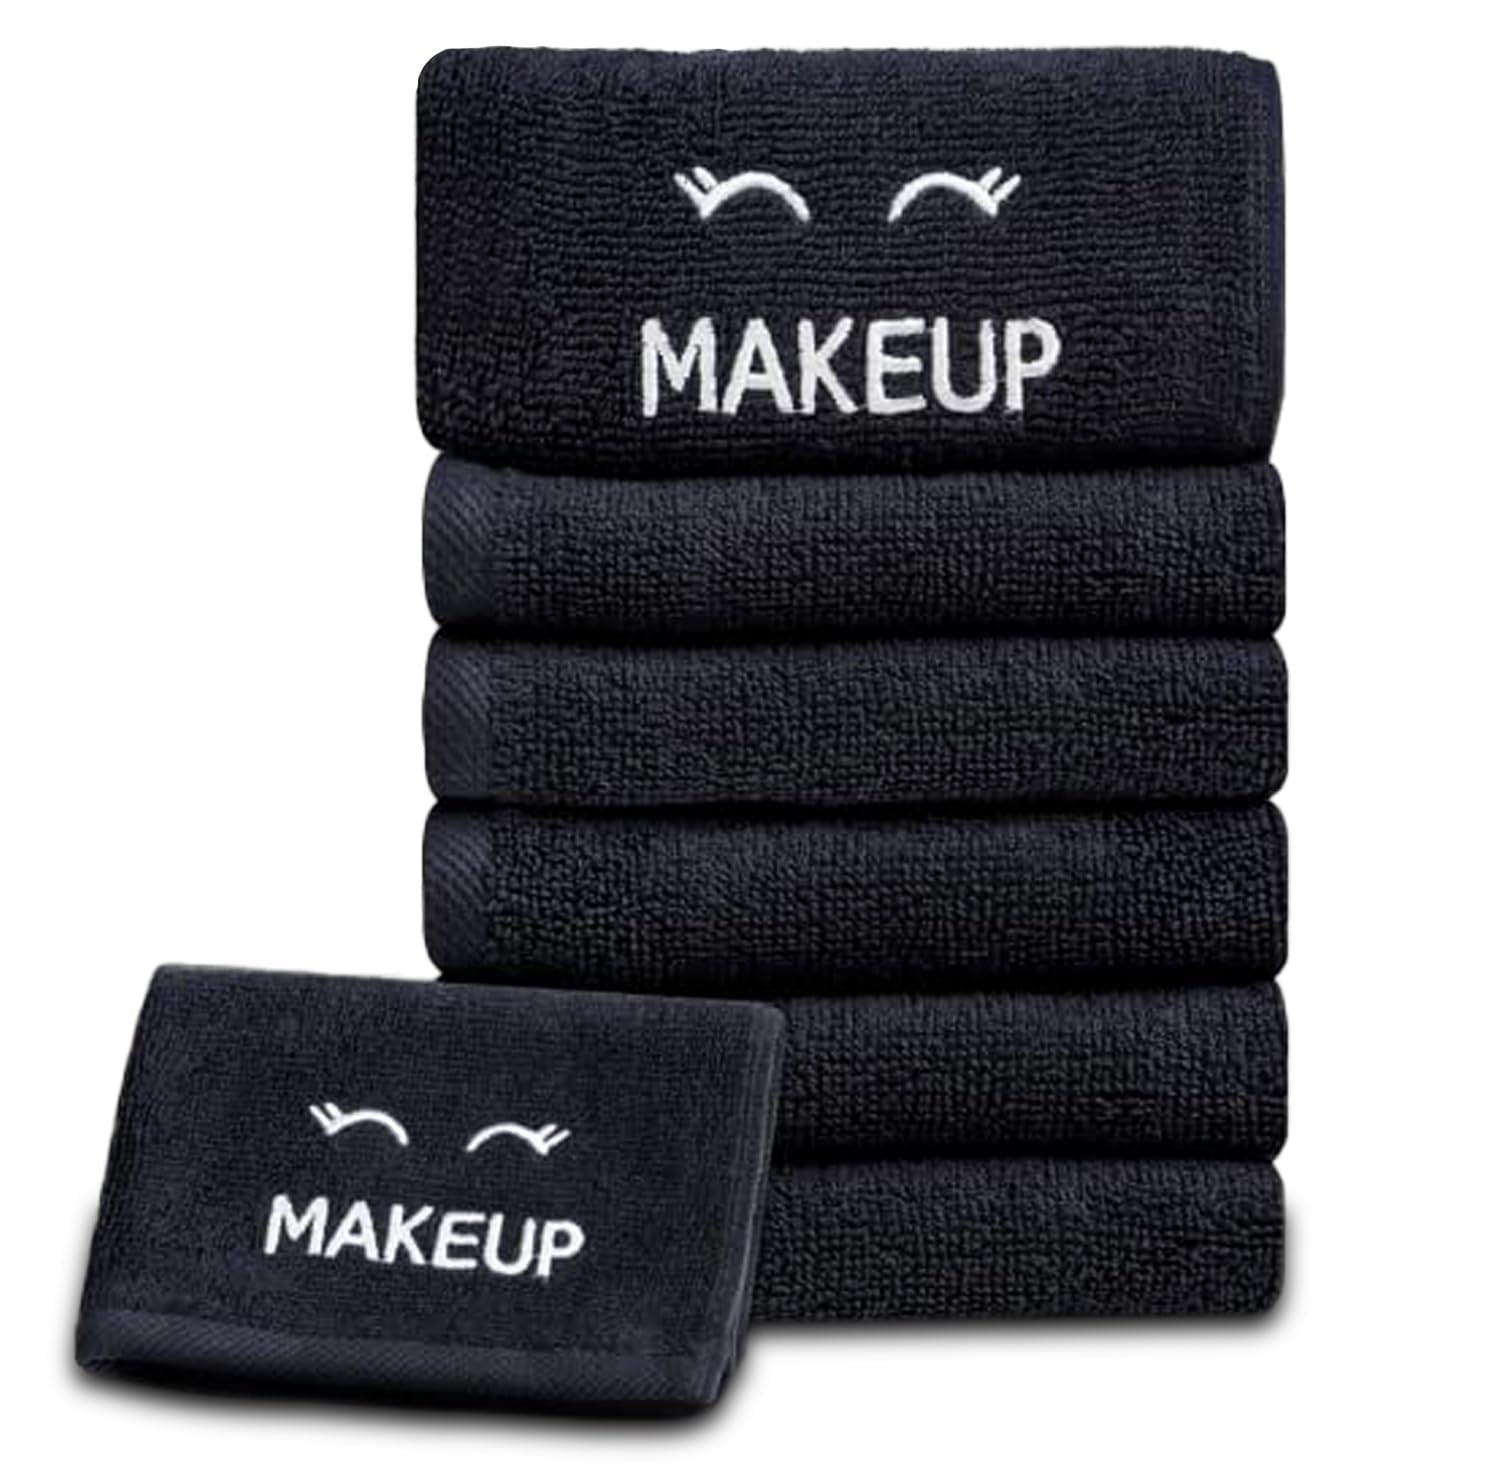 Bleach Safe Black Makeup Towels | Luxury Ultra Soft Cotton Face Washcloths Make up Removal | 6 Pack